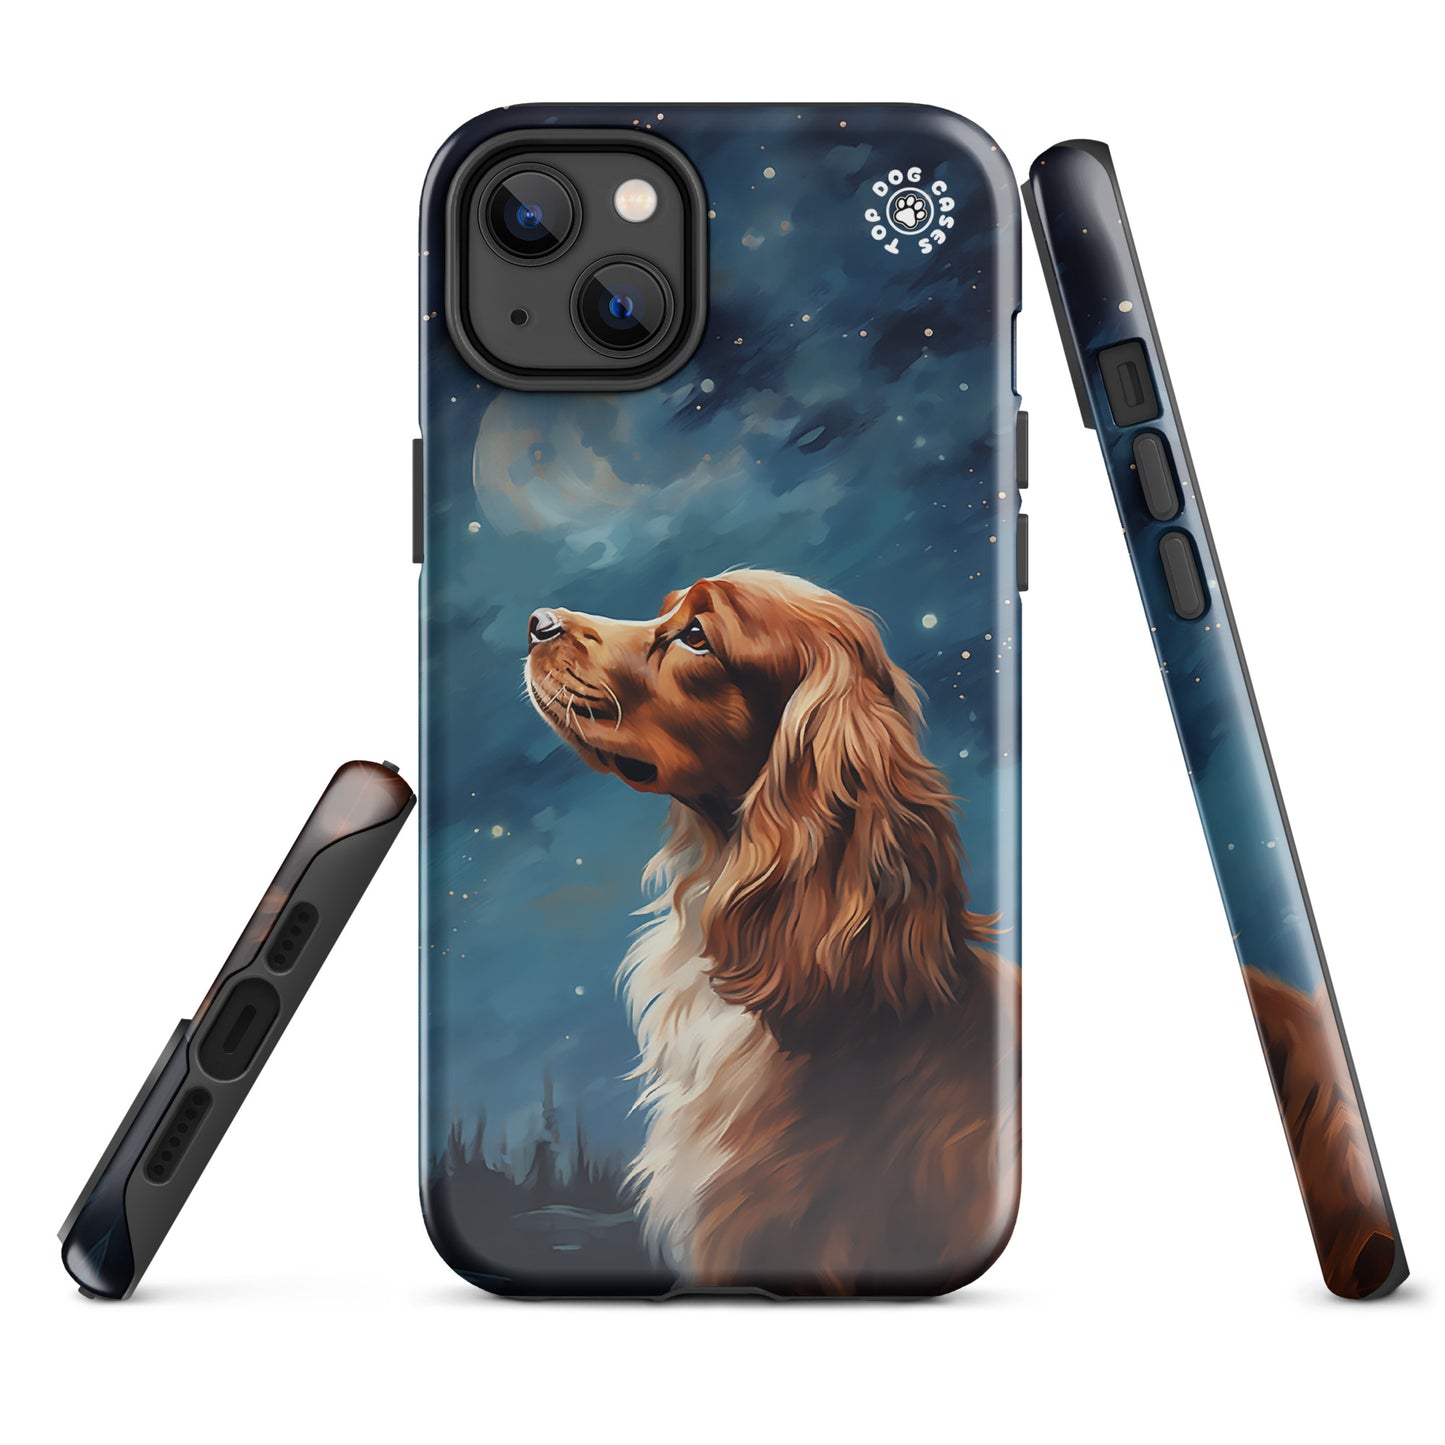 Cocker Spaniel - iPhone Case - Cute Phone Cases